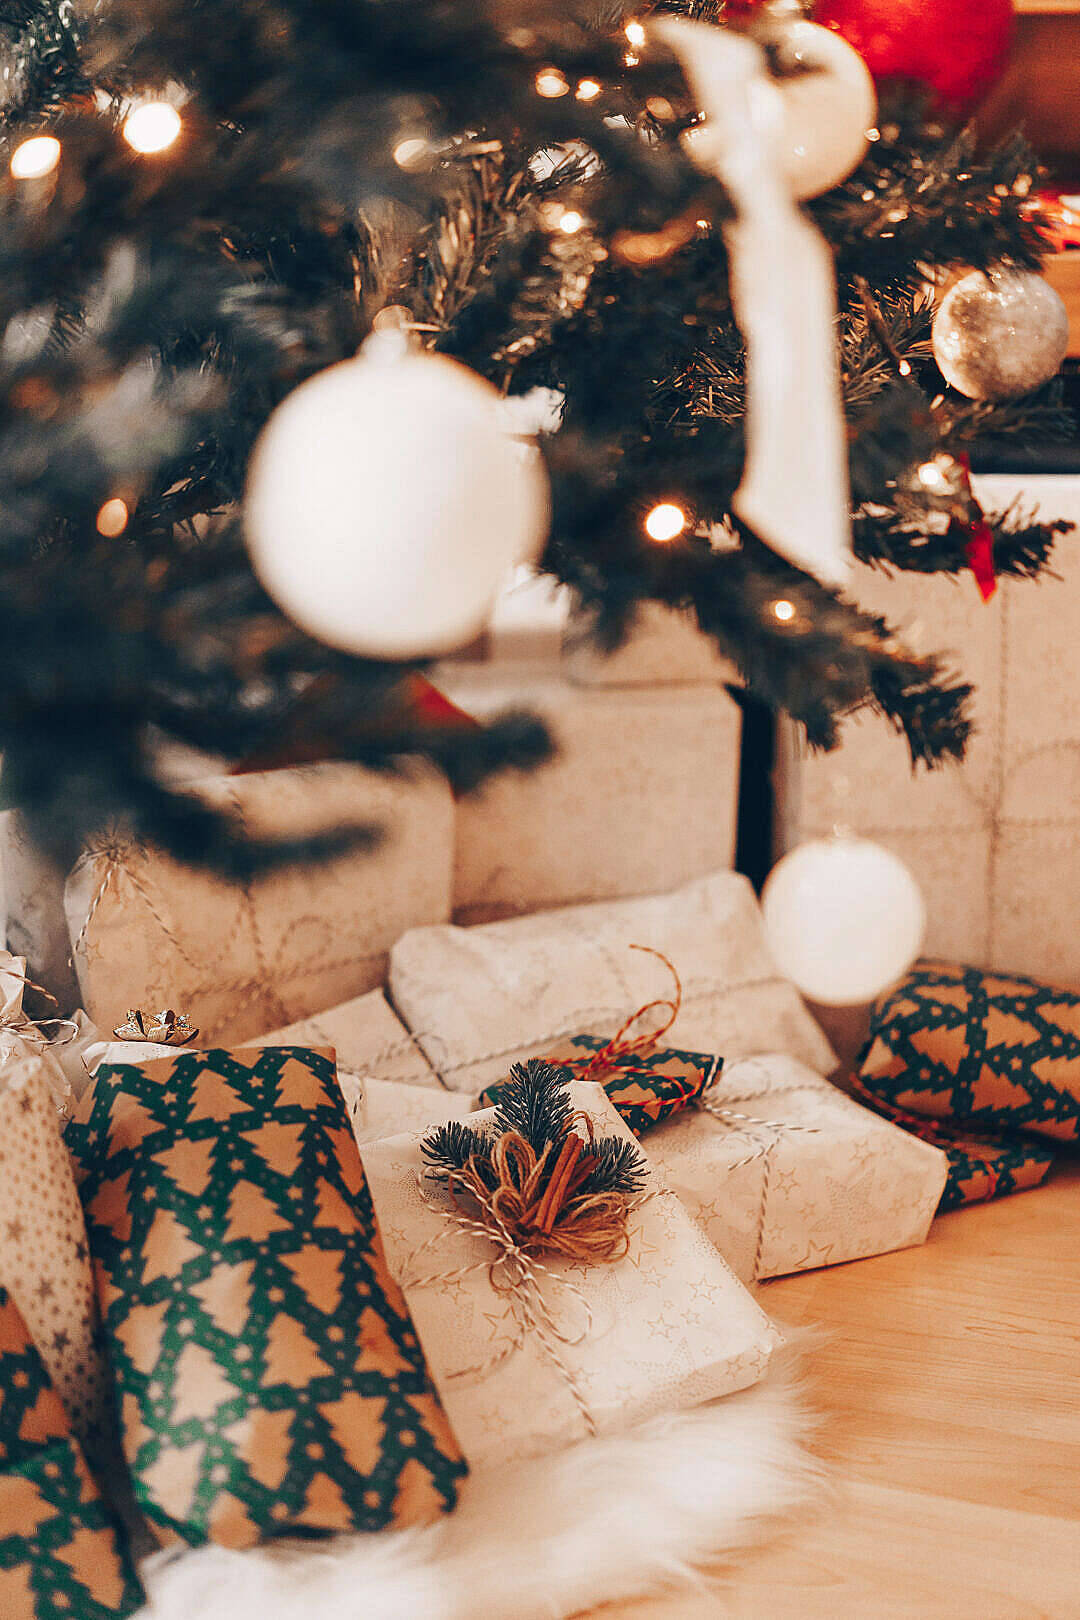 Pretty Presents Under Christmas Tree Background